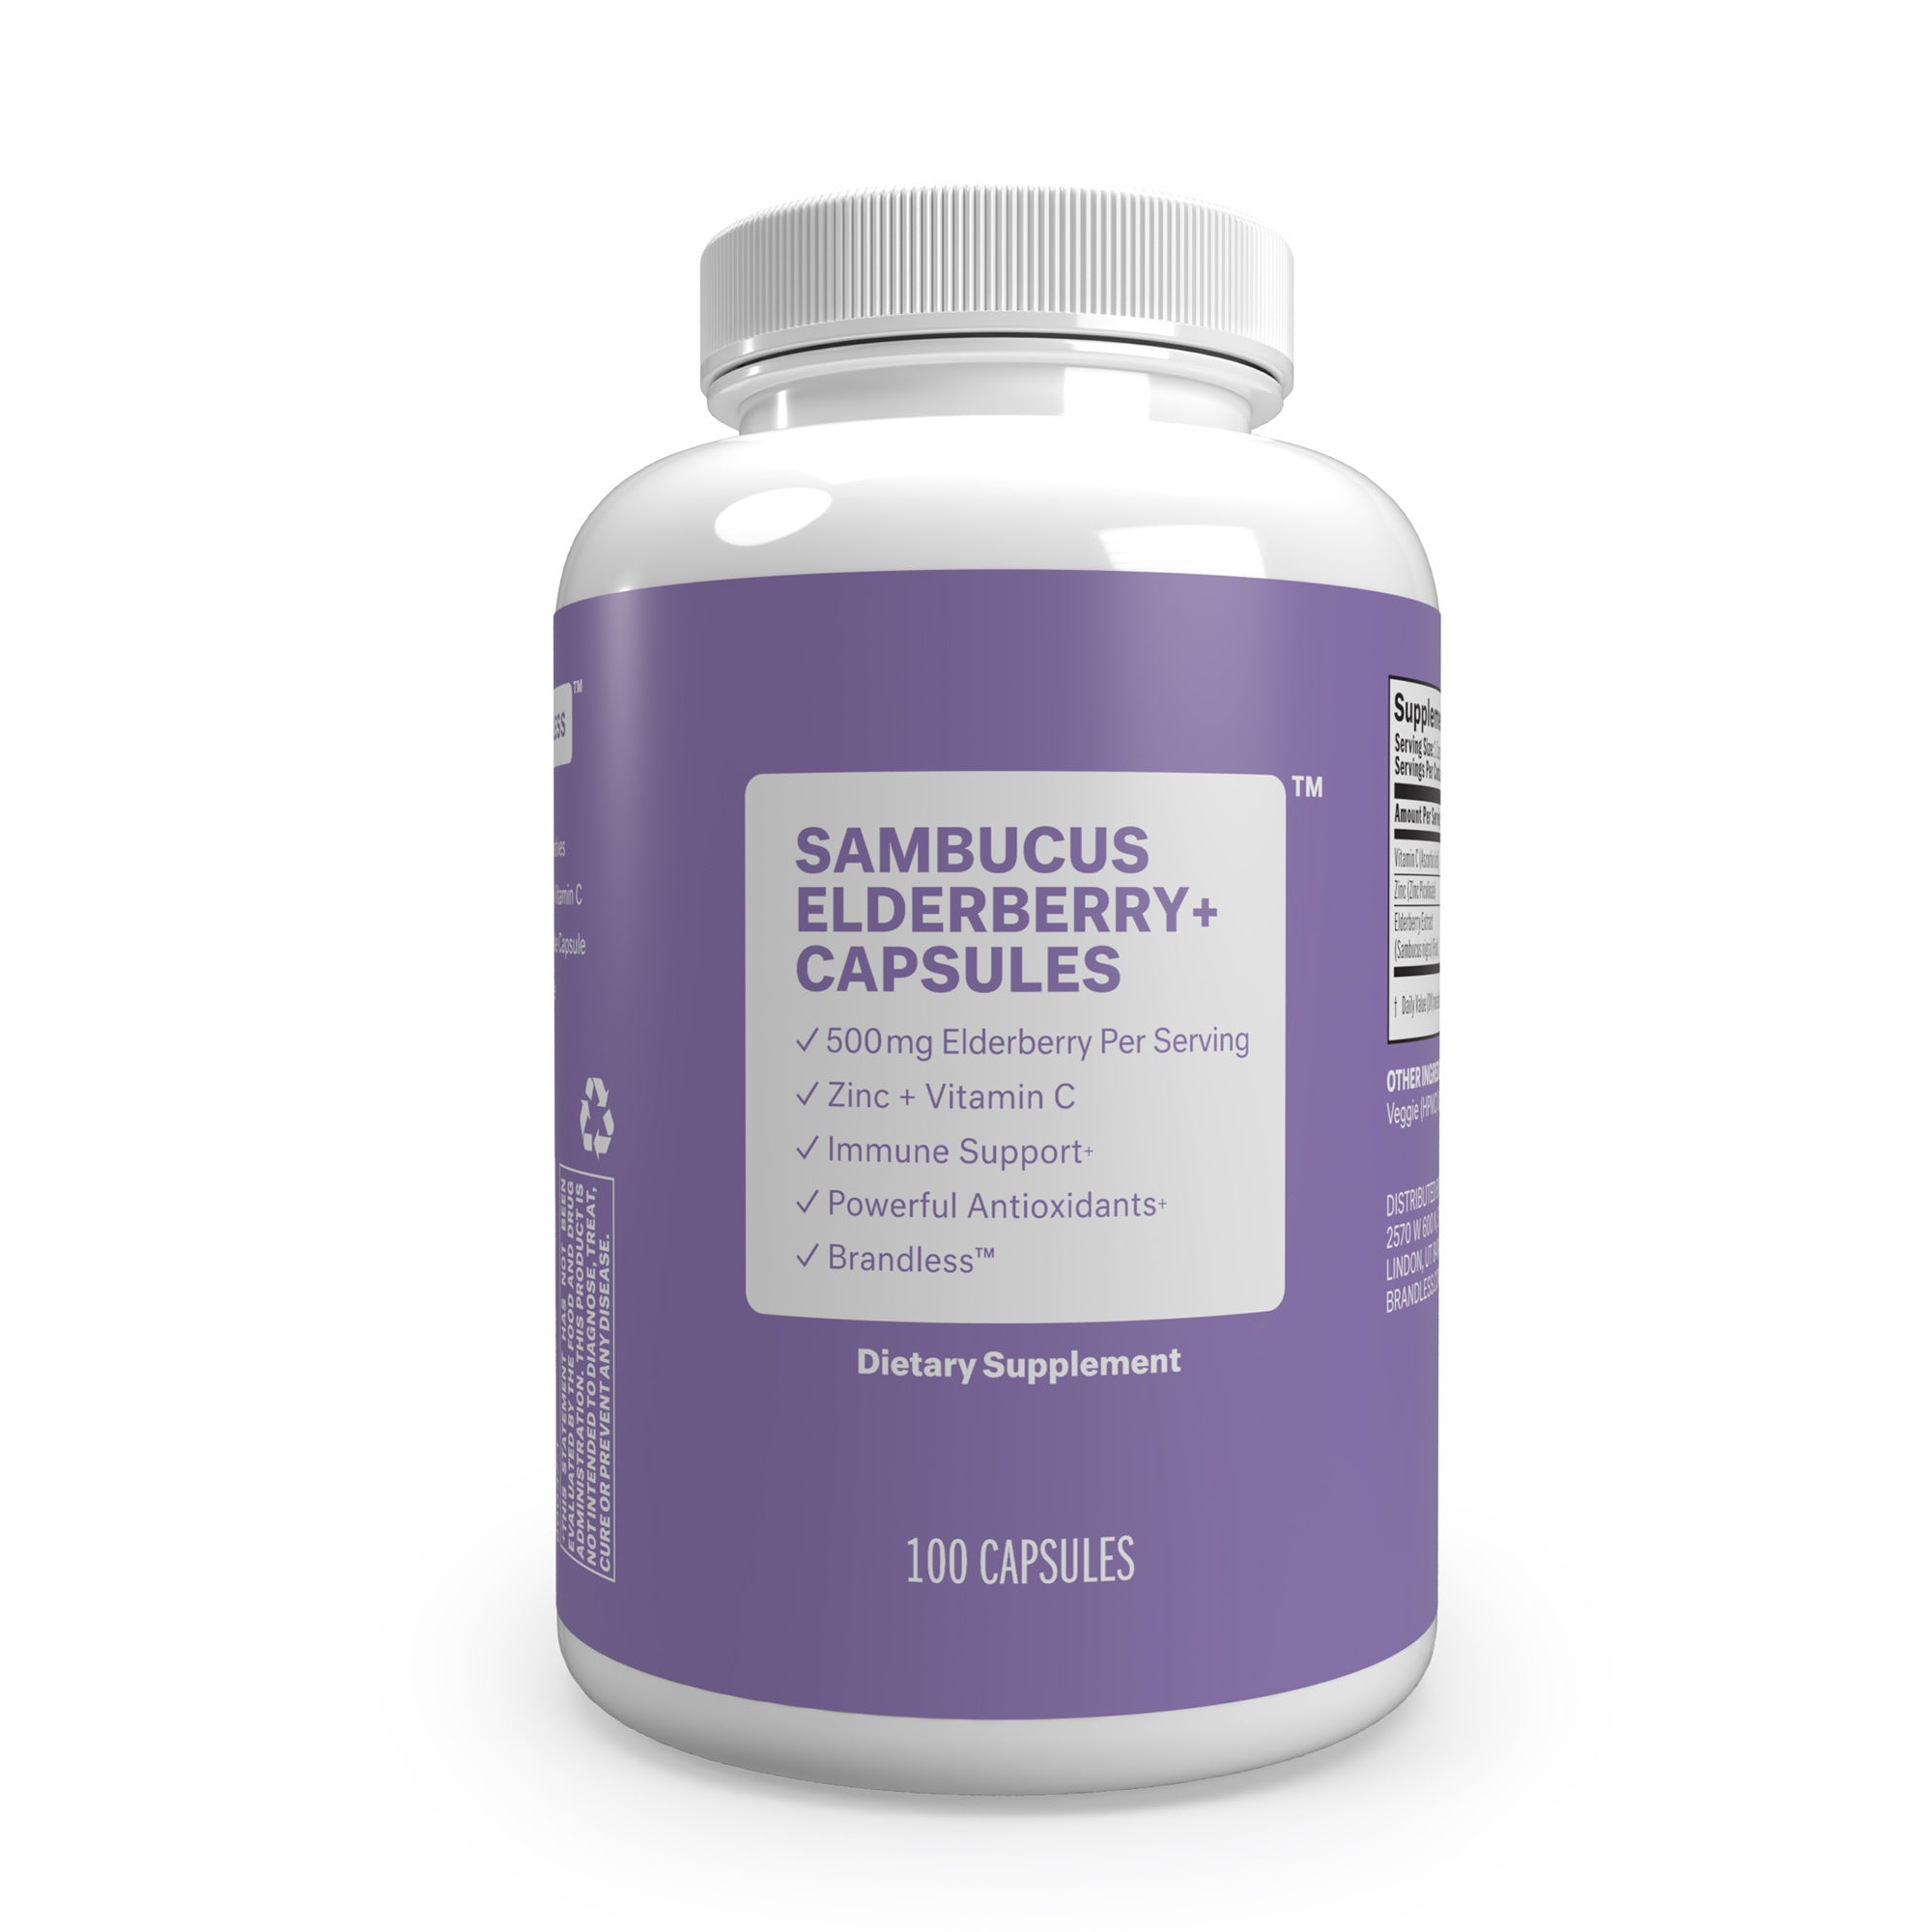 Sambucus Elderberry+ Capsules. 500mg elderberry per serving. Zinc + Vitamin C. Immune Support. Powerful Antioxidants*. Brandless. Dietary Supplement. 100 Capsules. Bottle front.